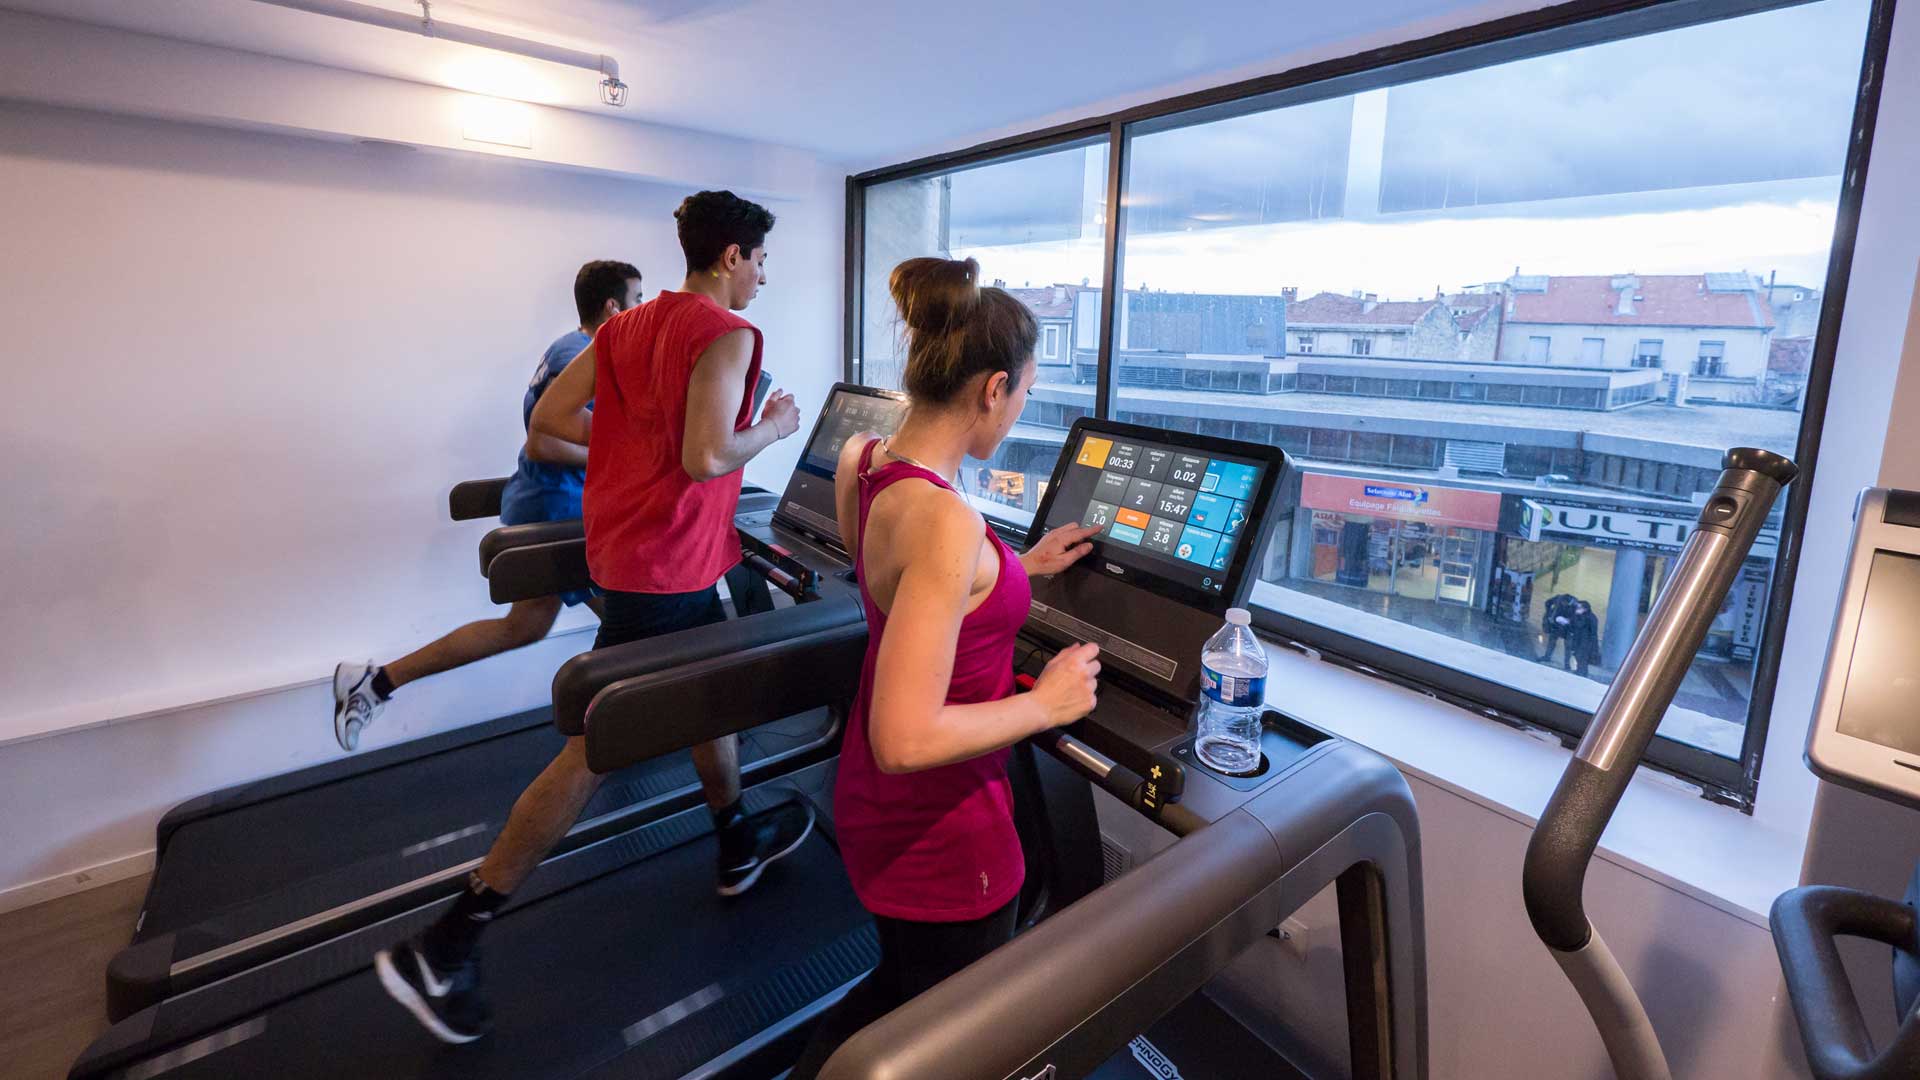 Salle de Sport Nîmes Centre | Fitness Musculation Cardio | Club de Forme